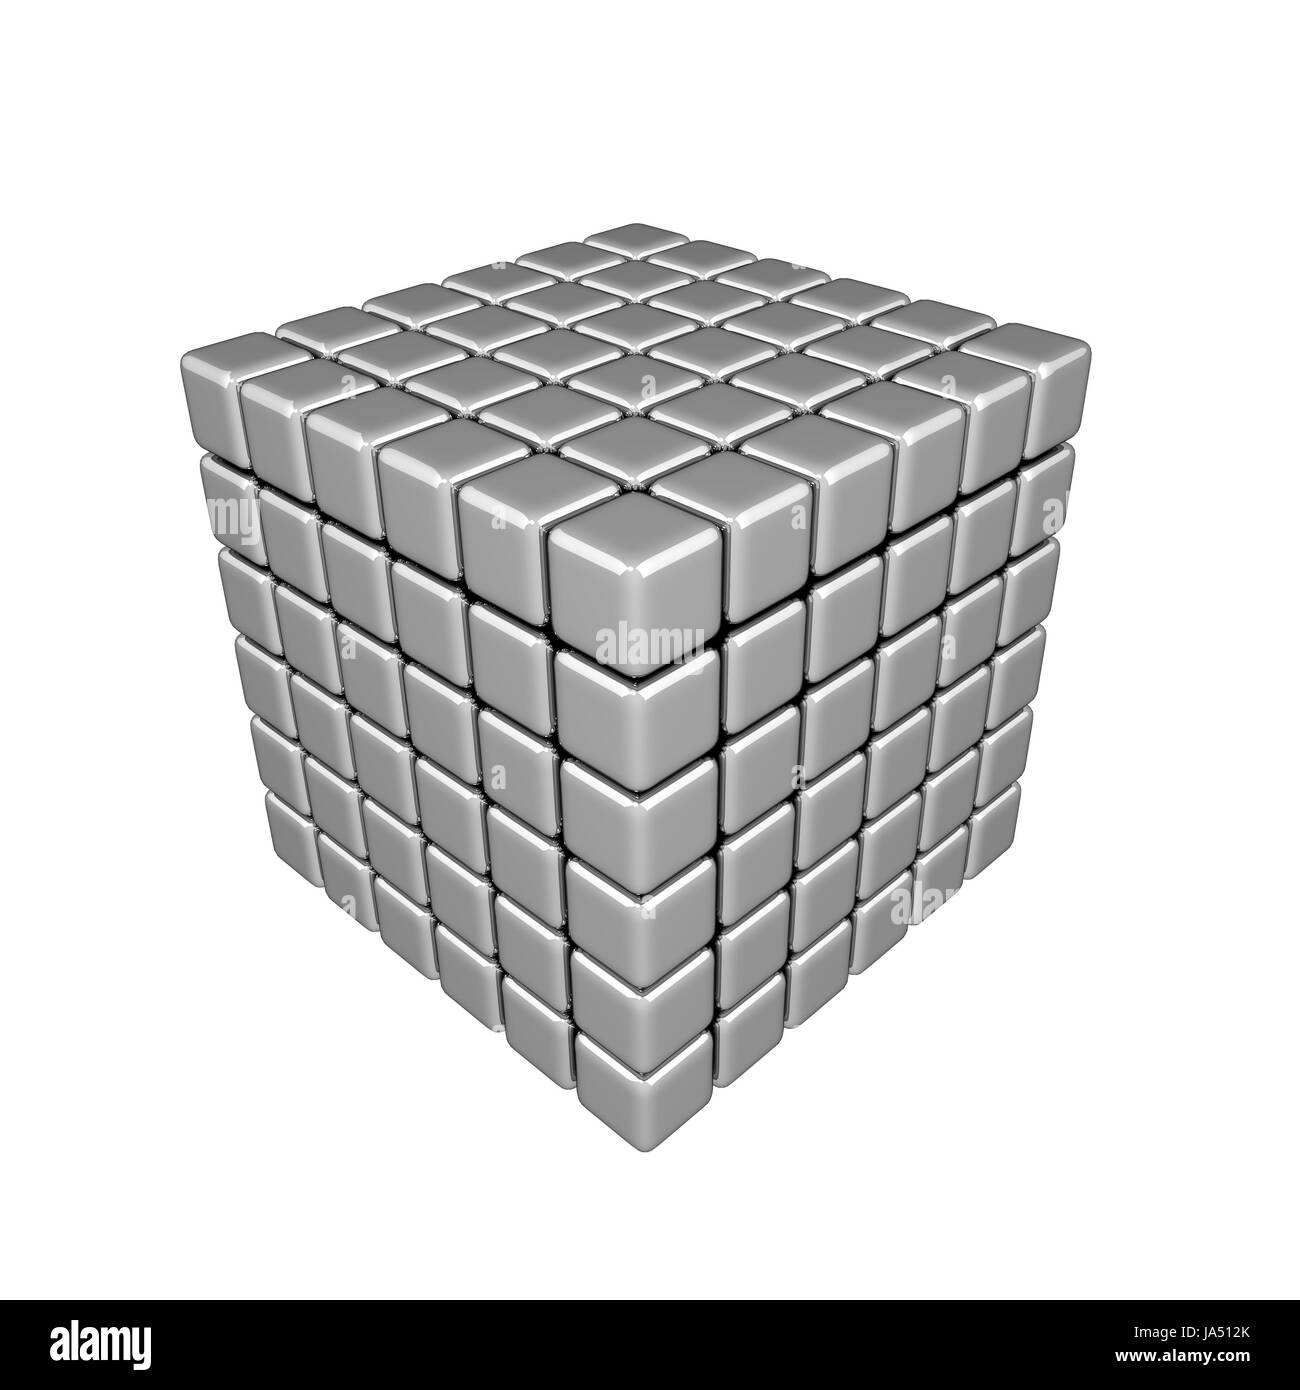 assembly, brick, cube, block, assembling, structure, bricks, cubes, order, Stock Photo